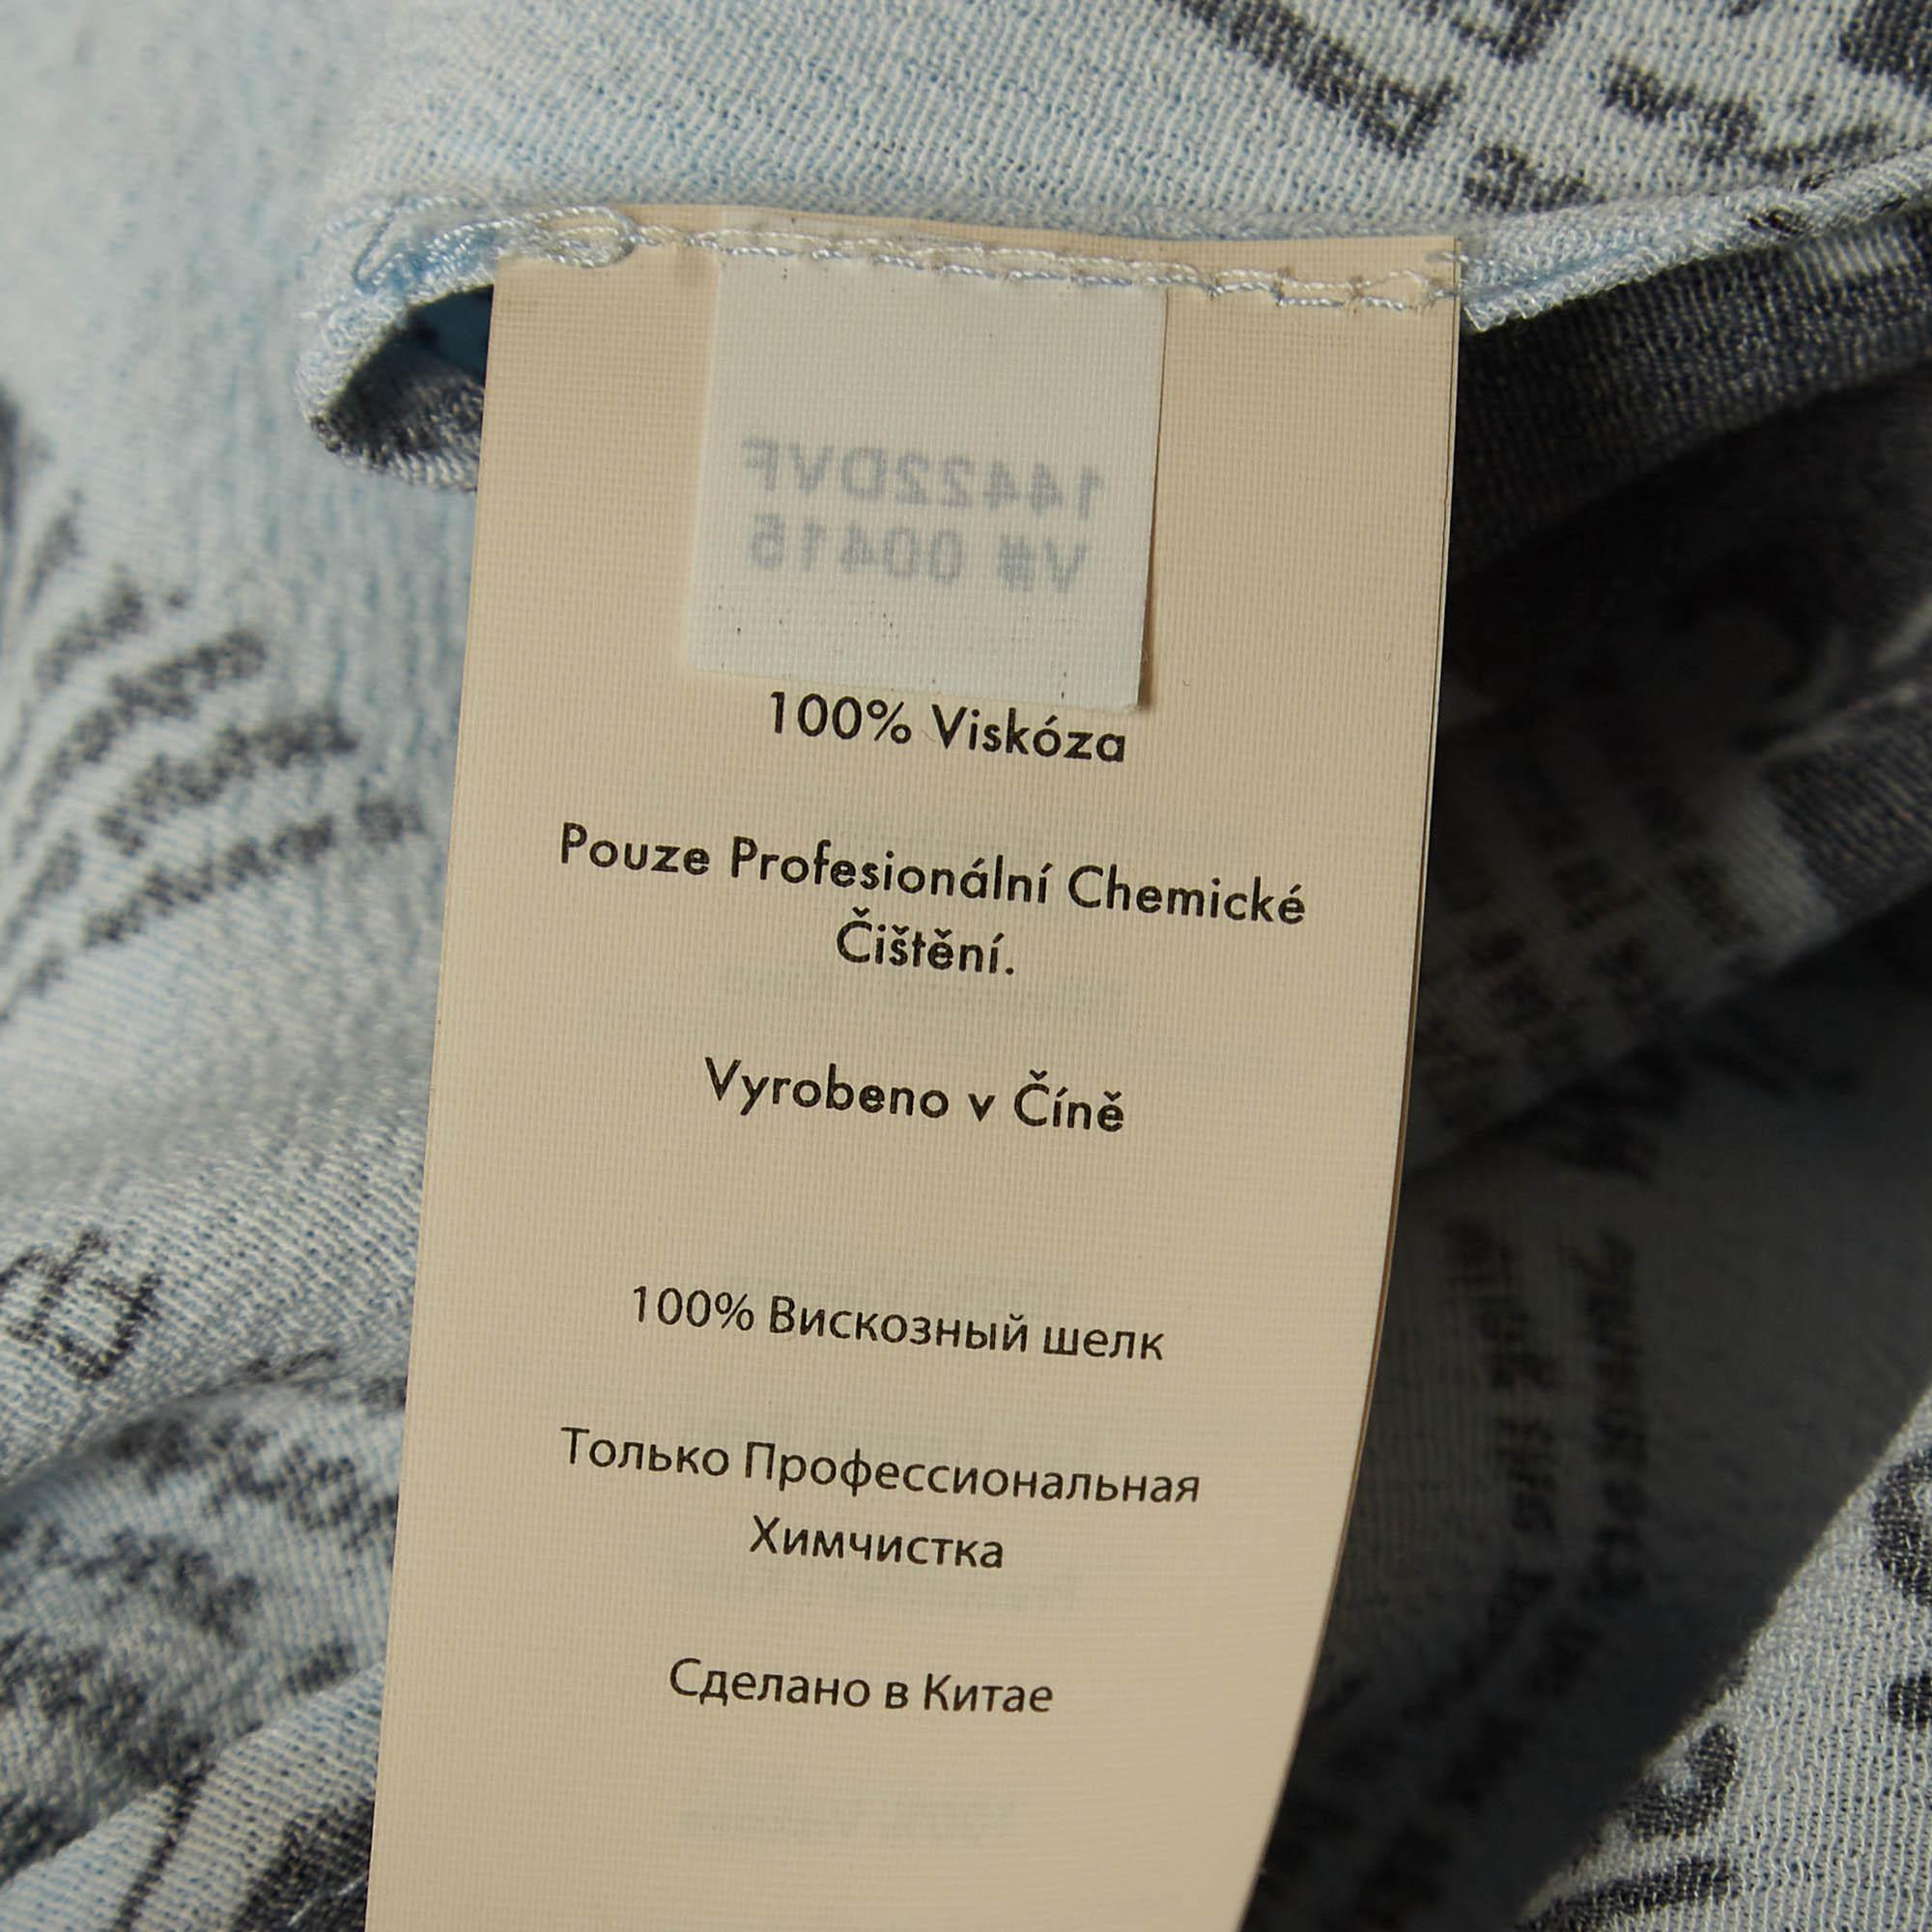 Diane Von Furstenberg Blue Newspaper Crepe Printed Wrap Dress S 1